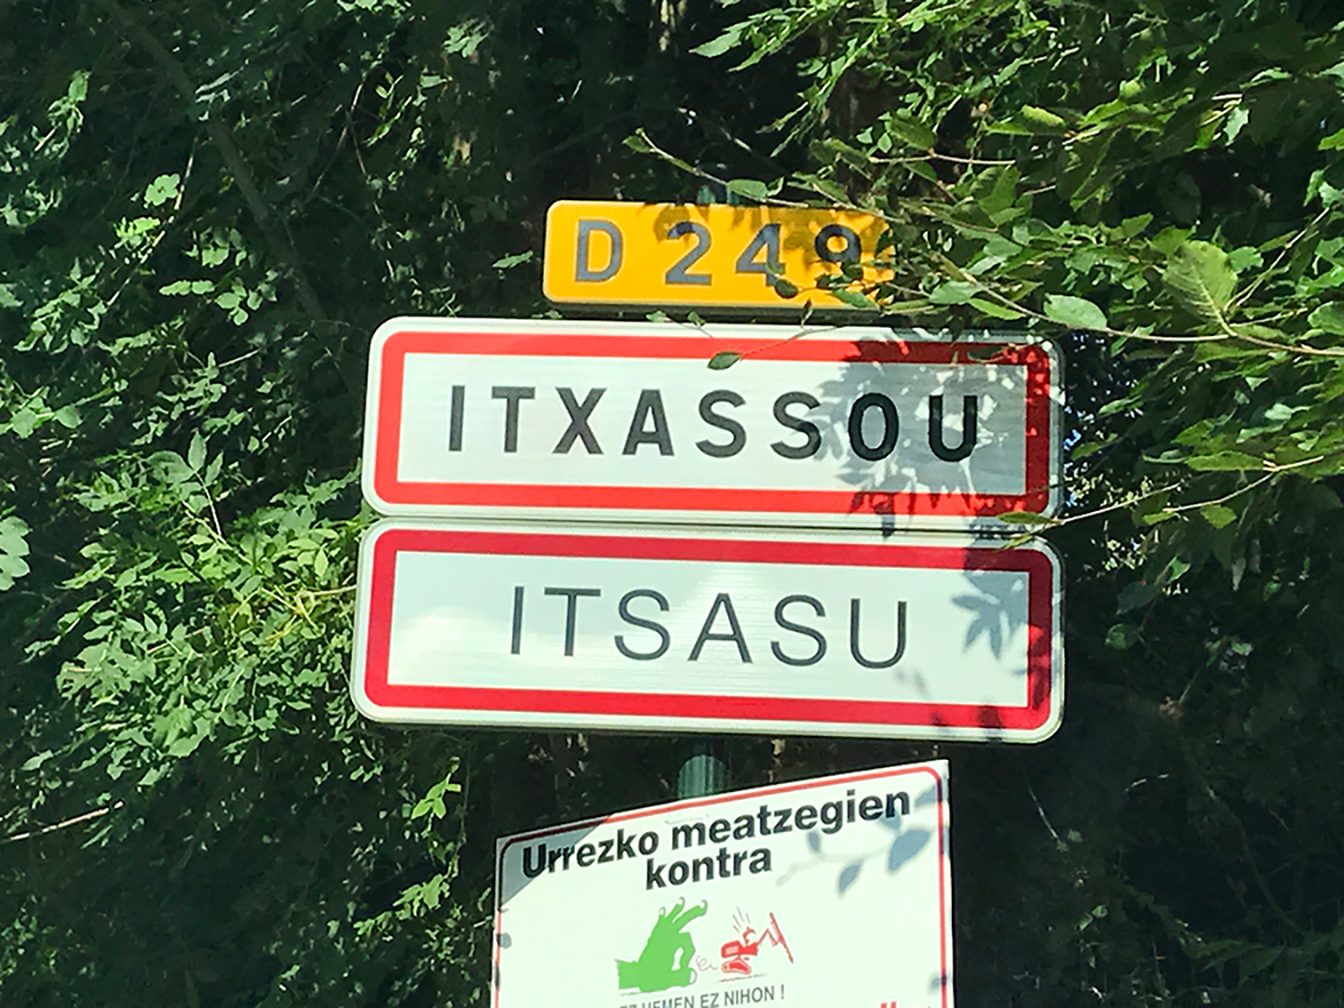 La délicieuse Sauce Basquaise d’ Itxassou (i-tcha-ssou)